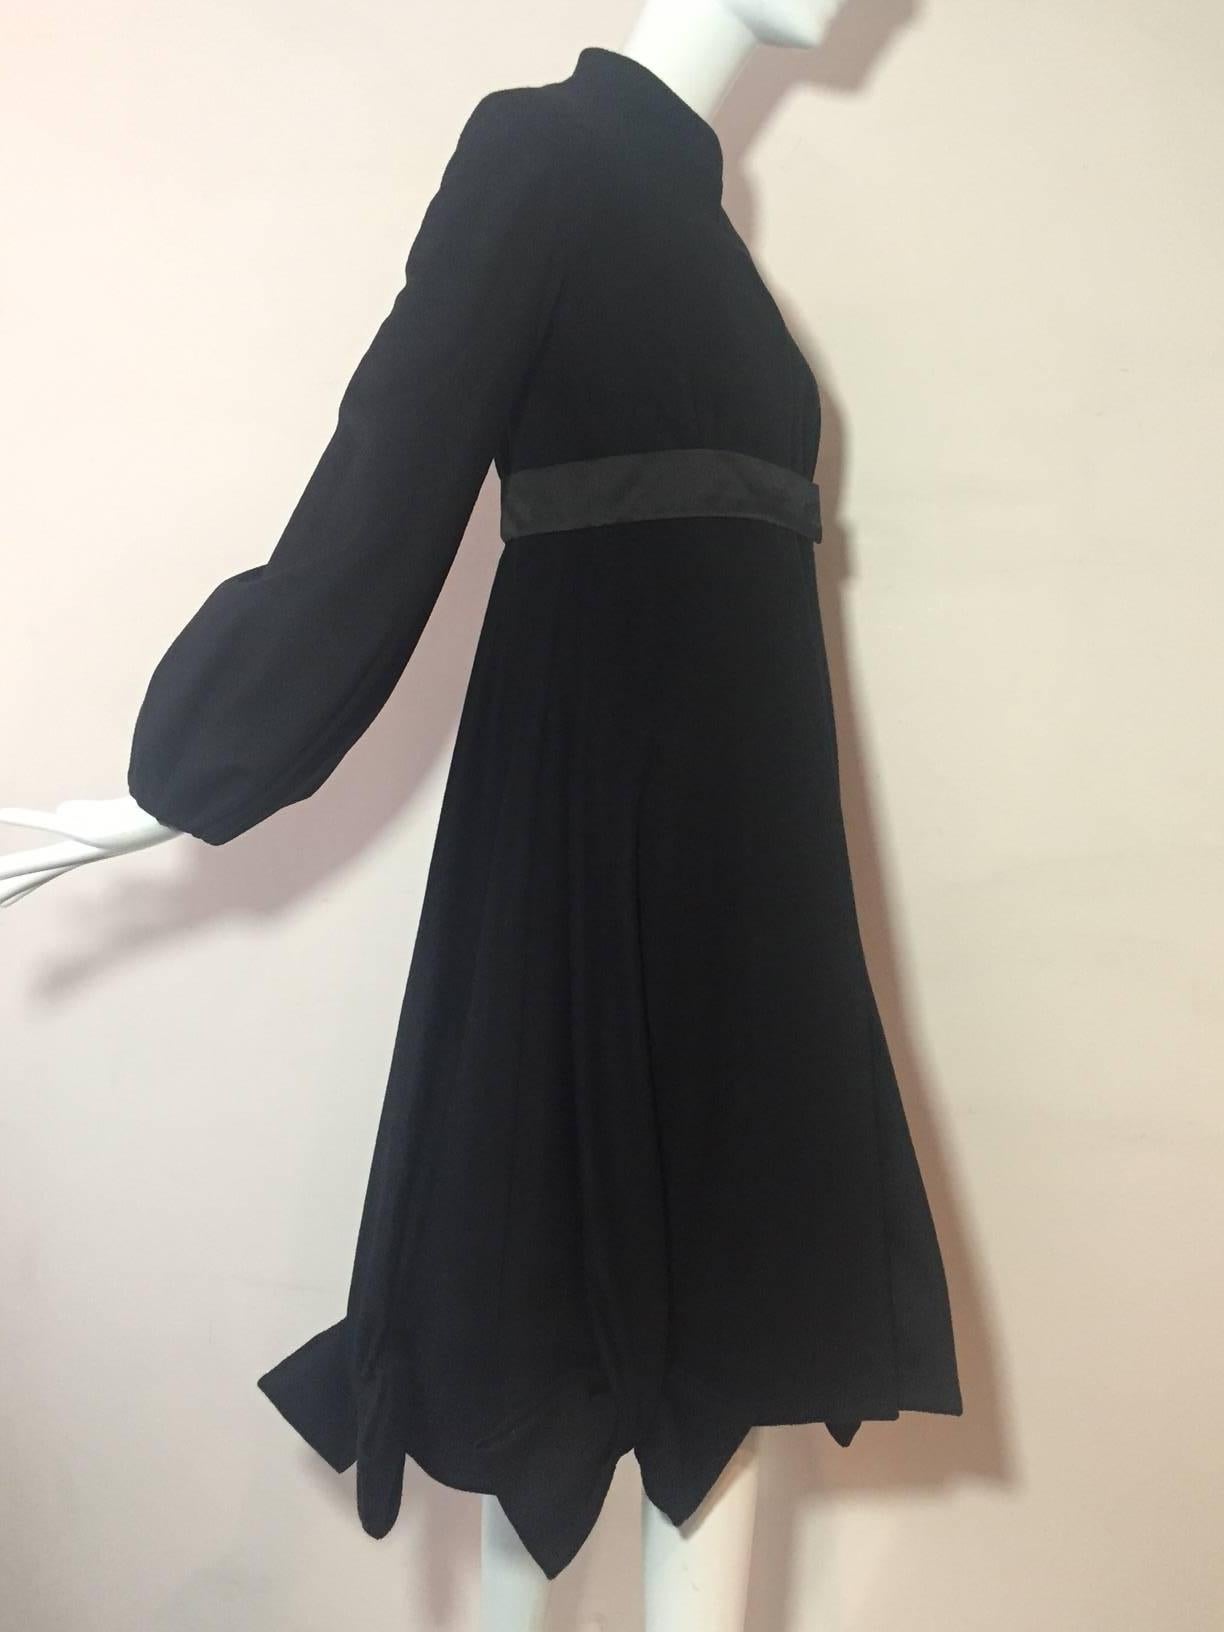 Black Givenchy Cashmere Princess Coat with Bows at Hem